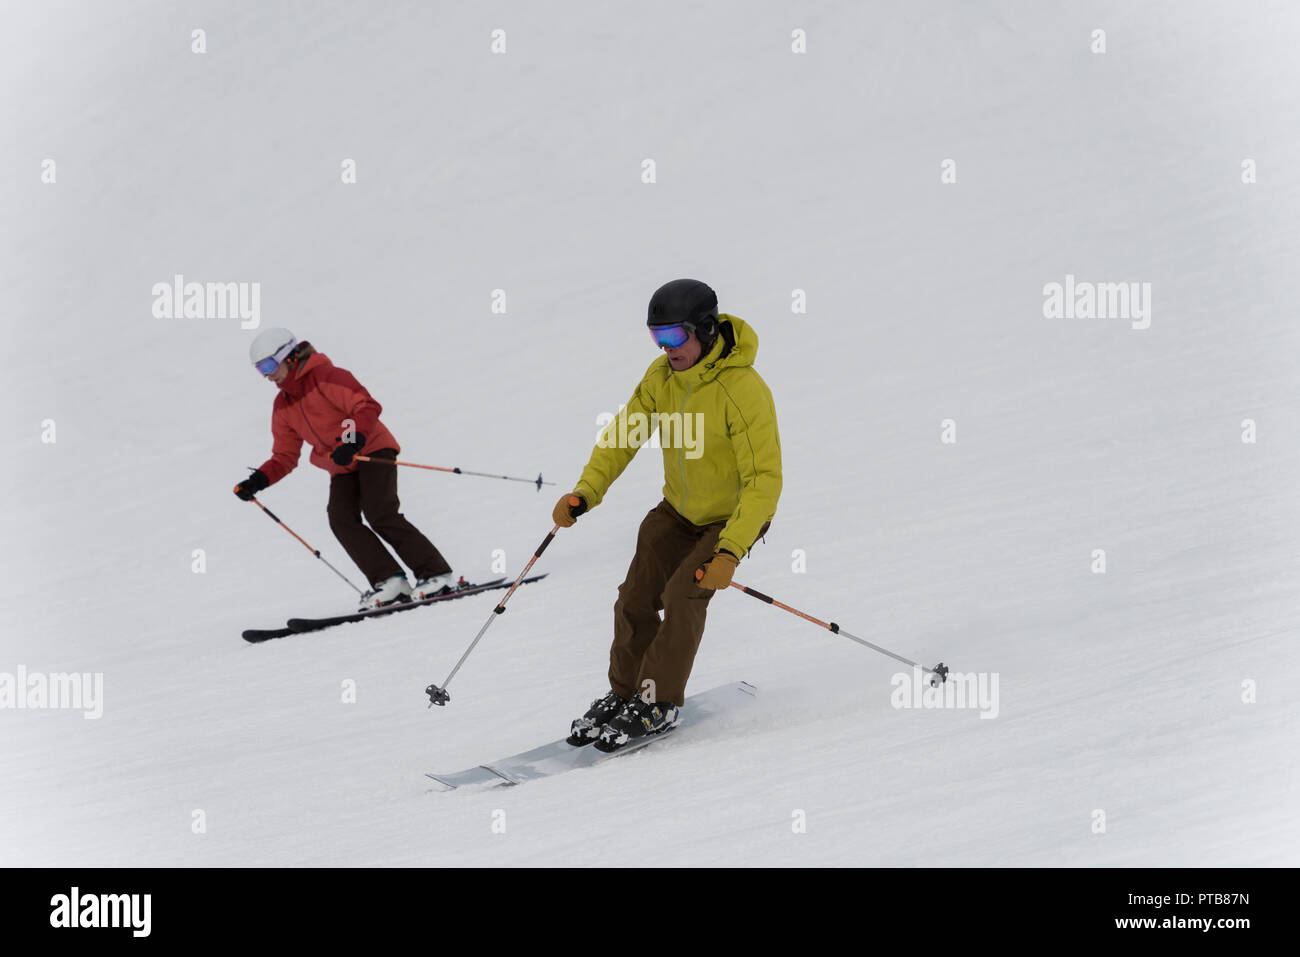 Skier couple skiing on snowy landscape Stock Photo